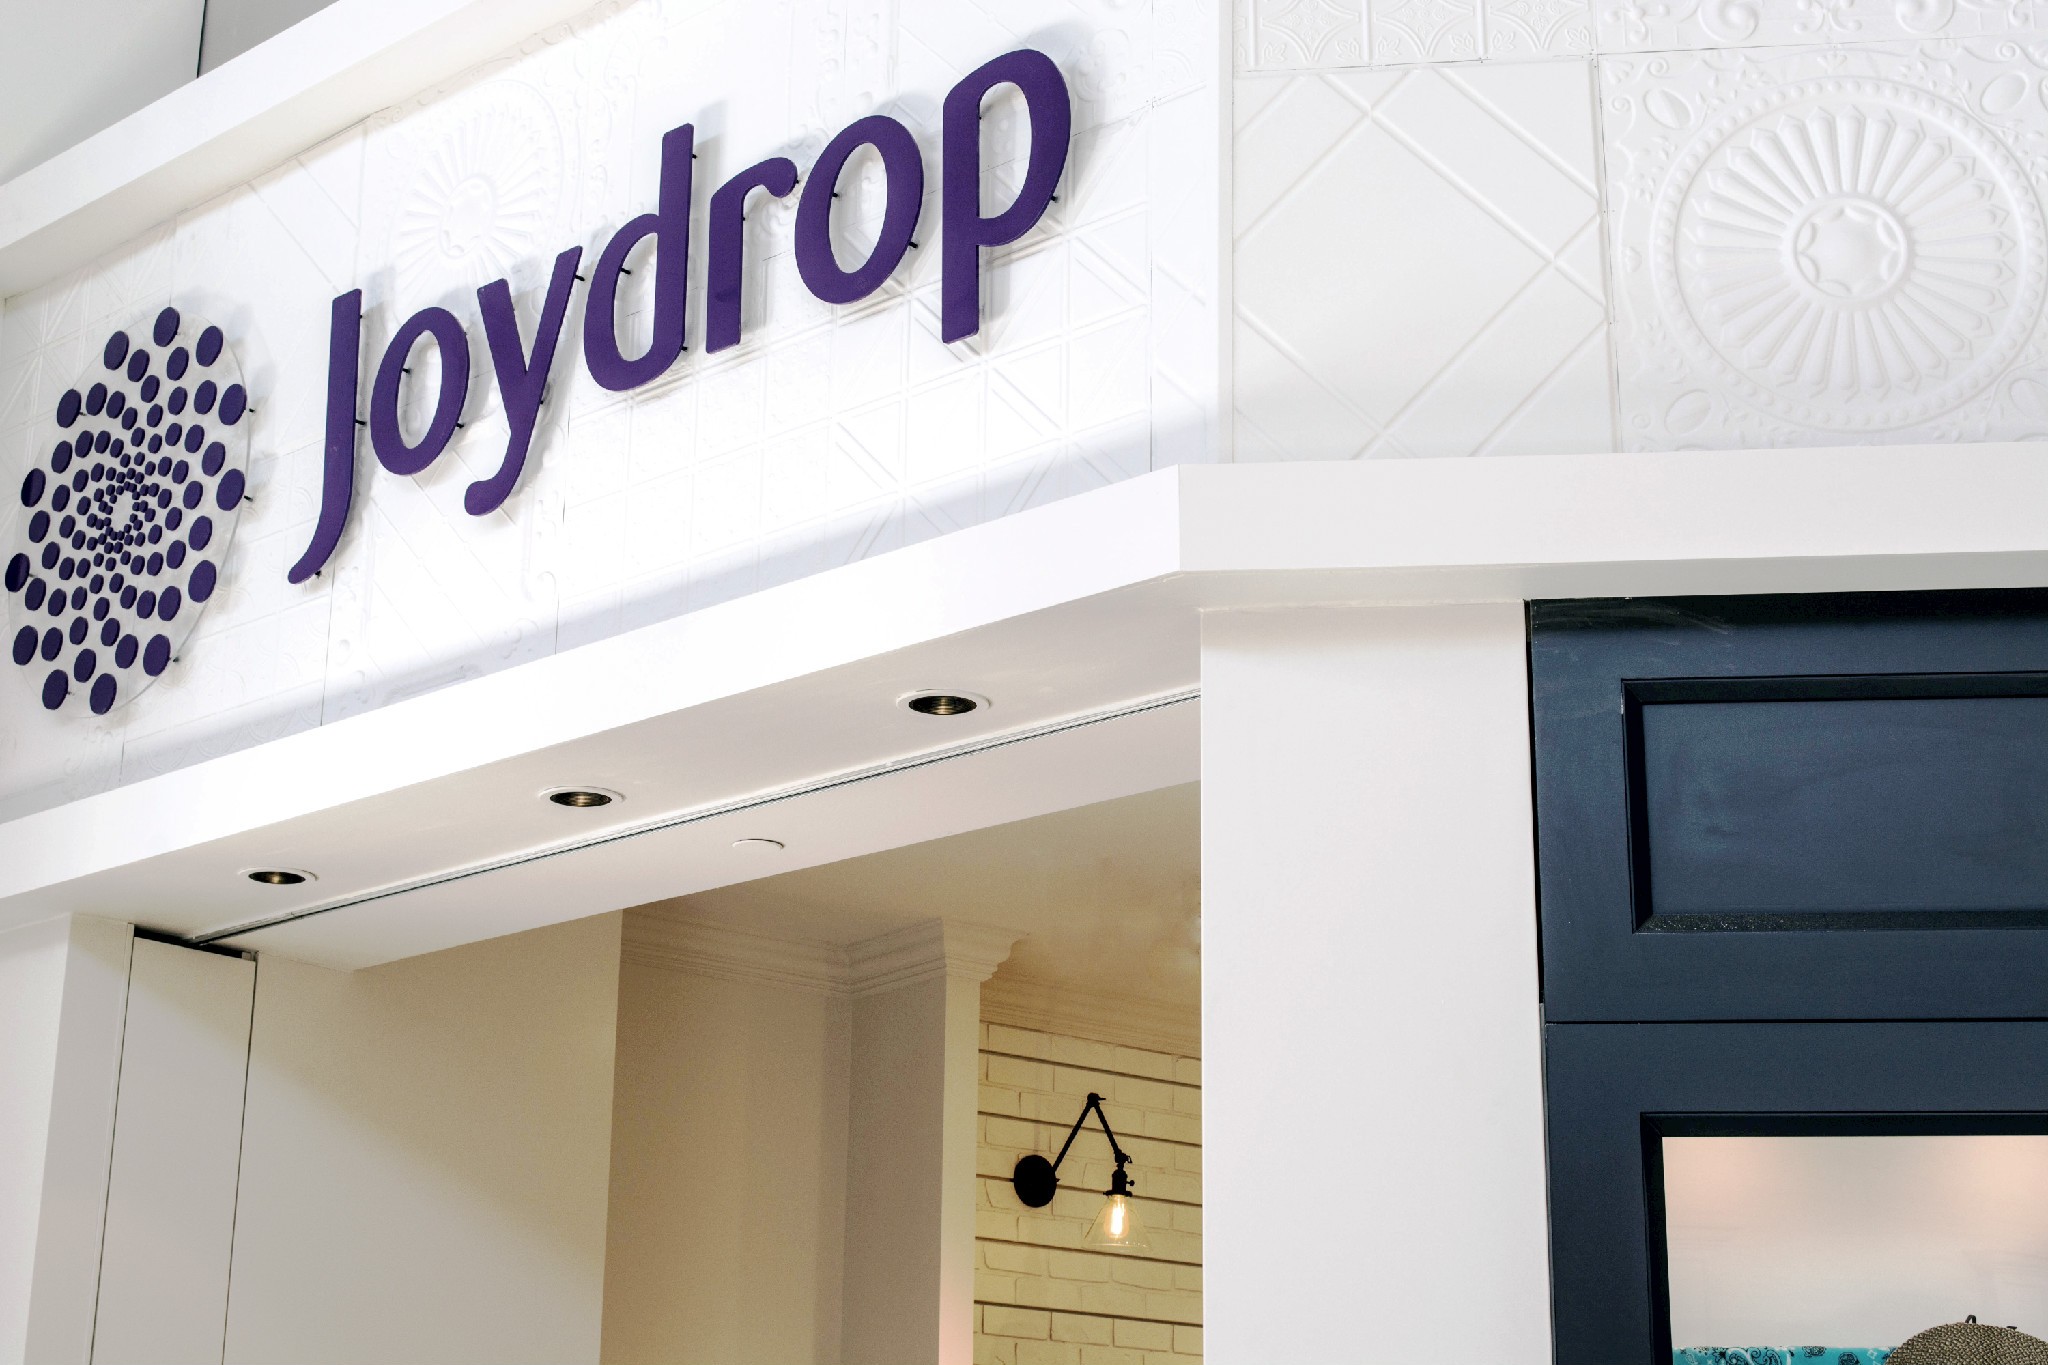 Storefront Branding, Retail Interior Design, Joydrop in Calgary Alberta, by Cutler